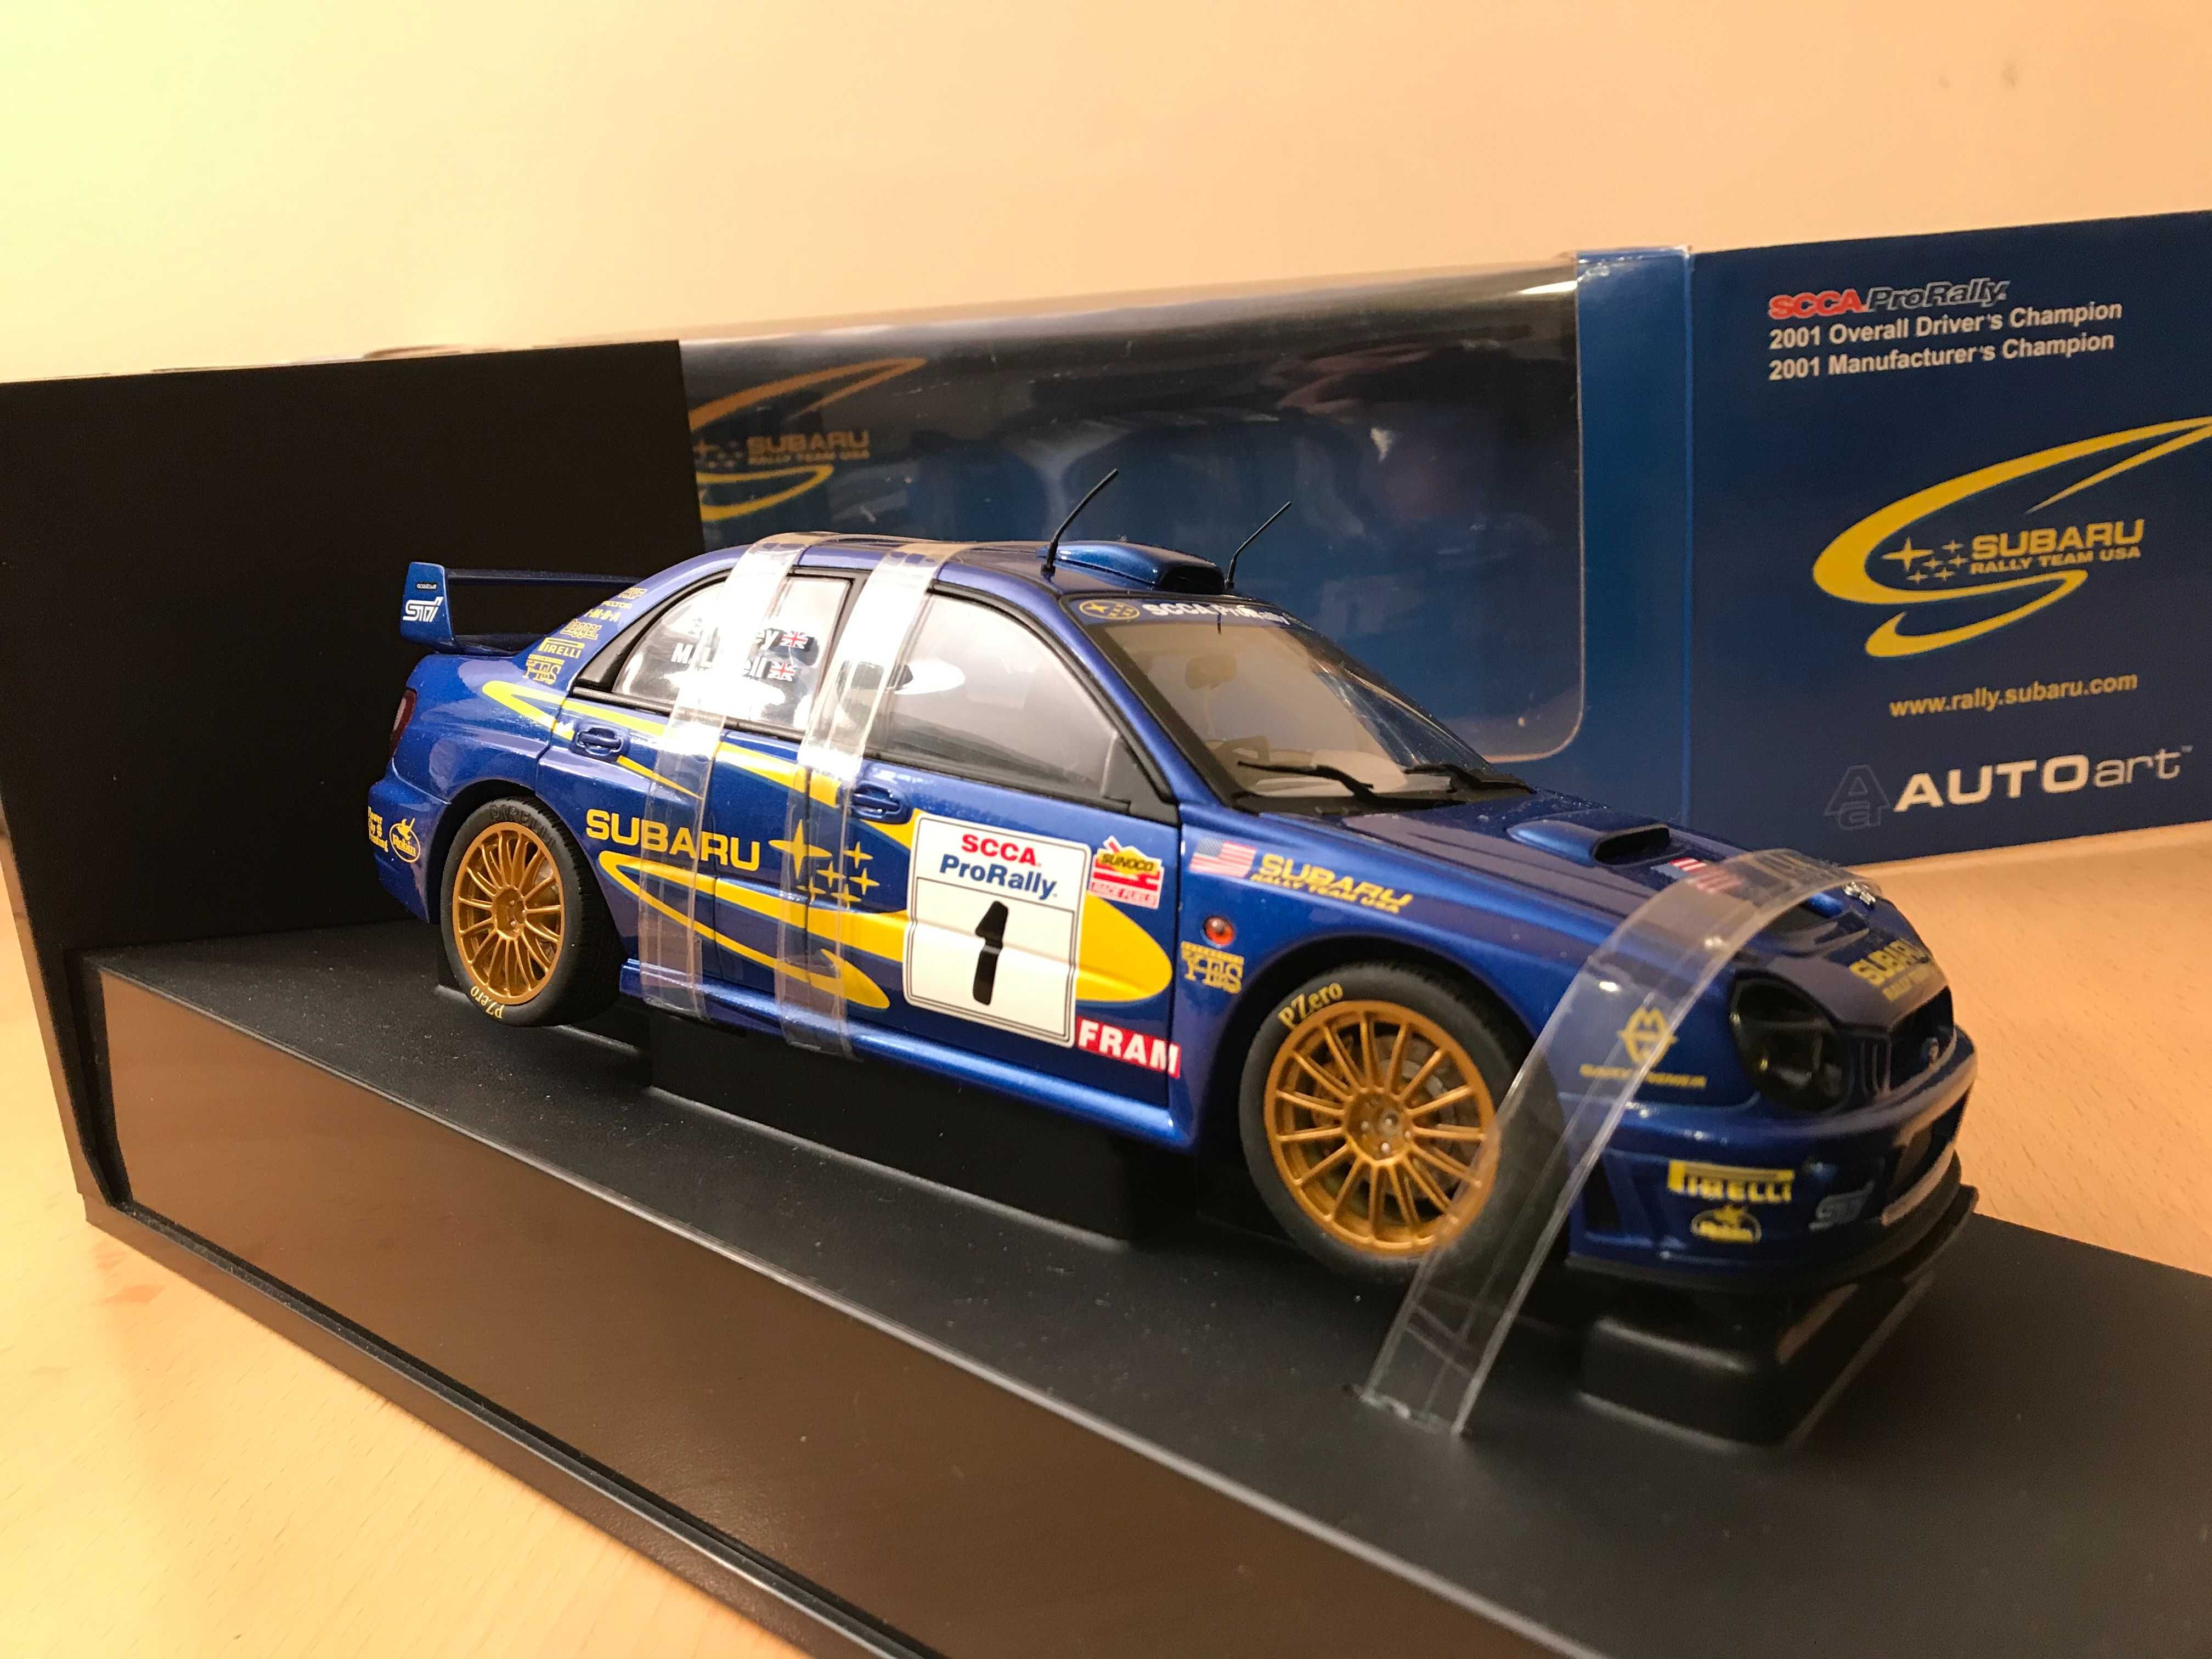 1/18 Autoart Subaru Impreza WRC Nr 1 Turvey/Lovell 2001 Rajd USA